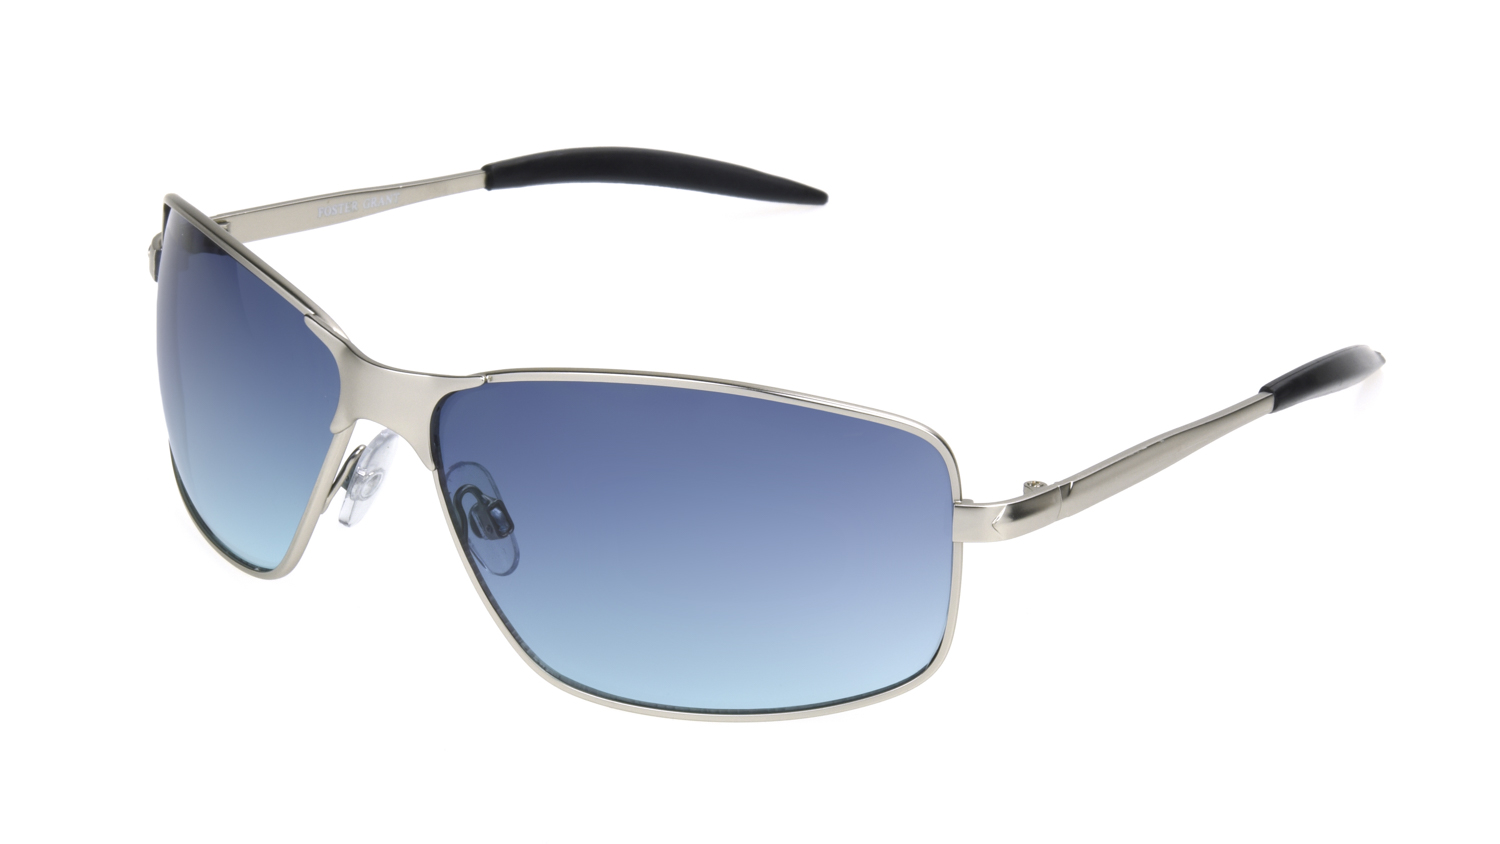 Foster Grant Men's Silver Rectangle Sunglasses XX12 - image 1 of 3